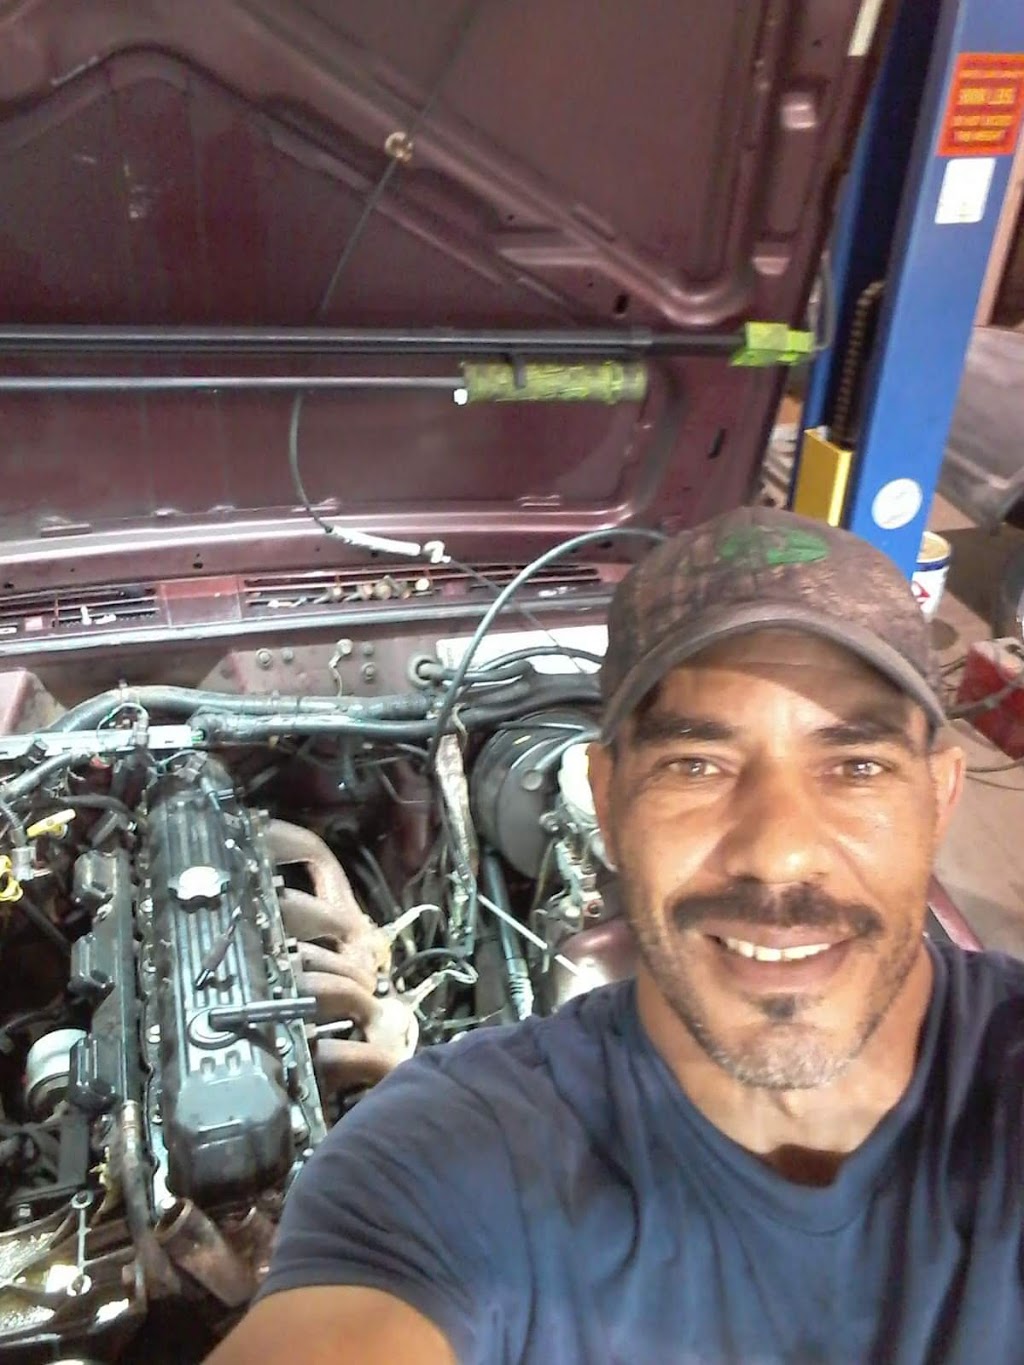 Pats Auto Repair | Photo 4 of 4 | Address: 8524 Side Trak, Leeds, AL 35094, USA | Phone: (205) 587-1556